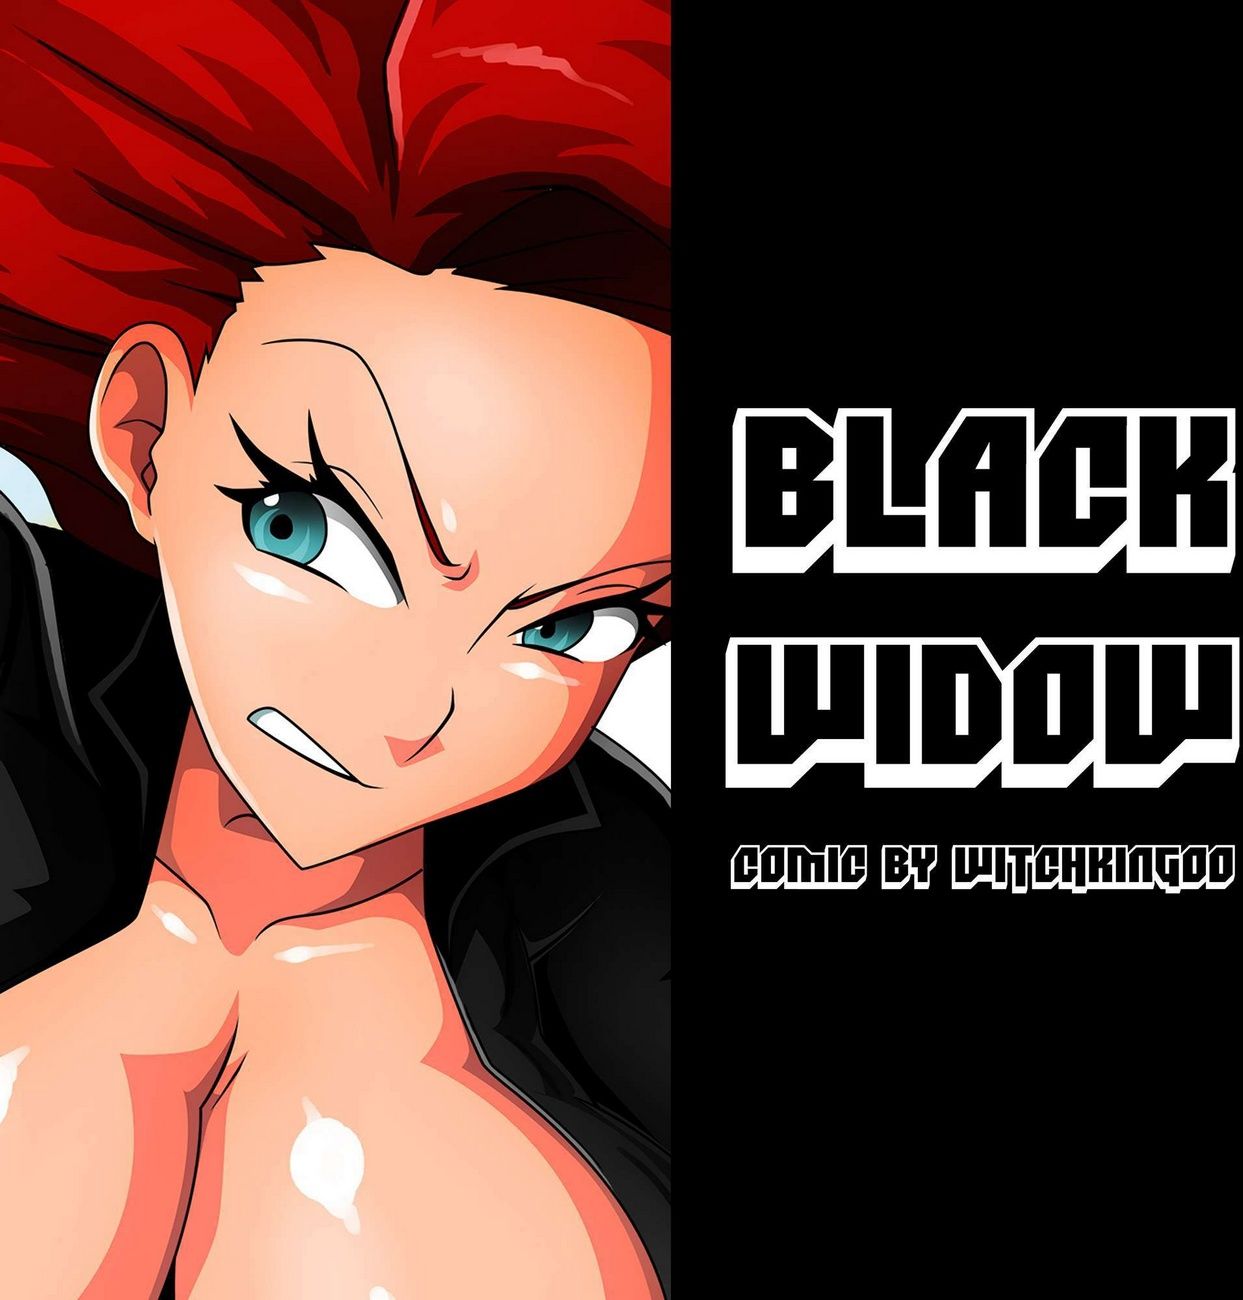 Black Widow page 1